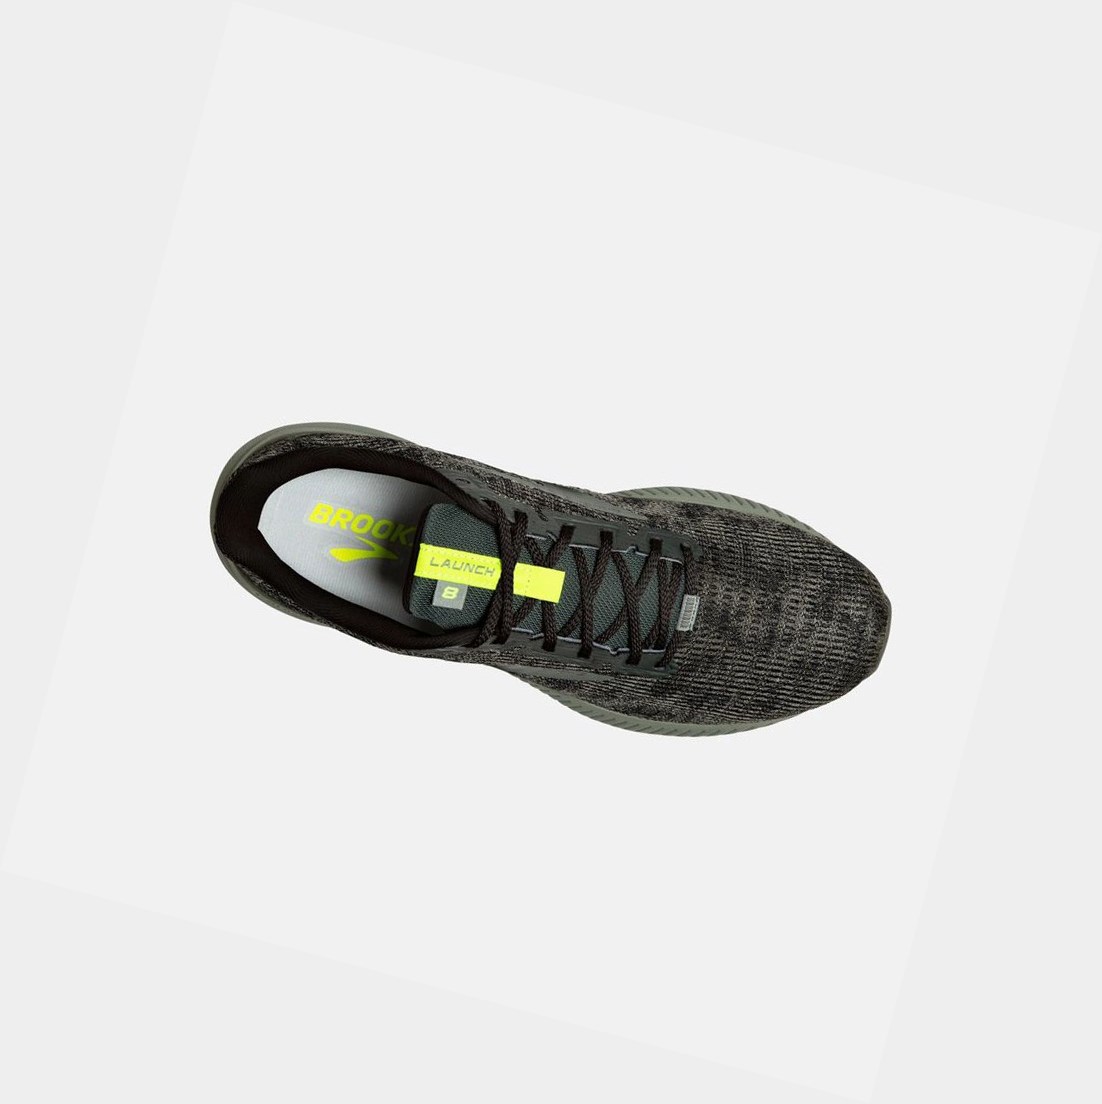 Brooks Launch 8 Men's Road Running Shoes Urban / Black / Nightlife | XVGL-90681